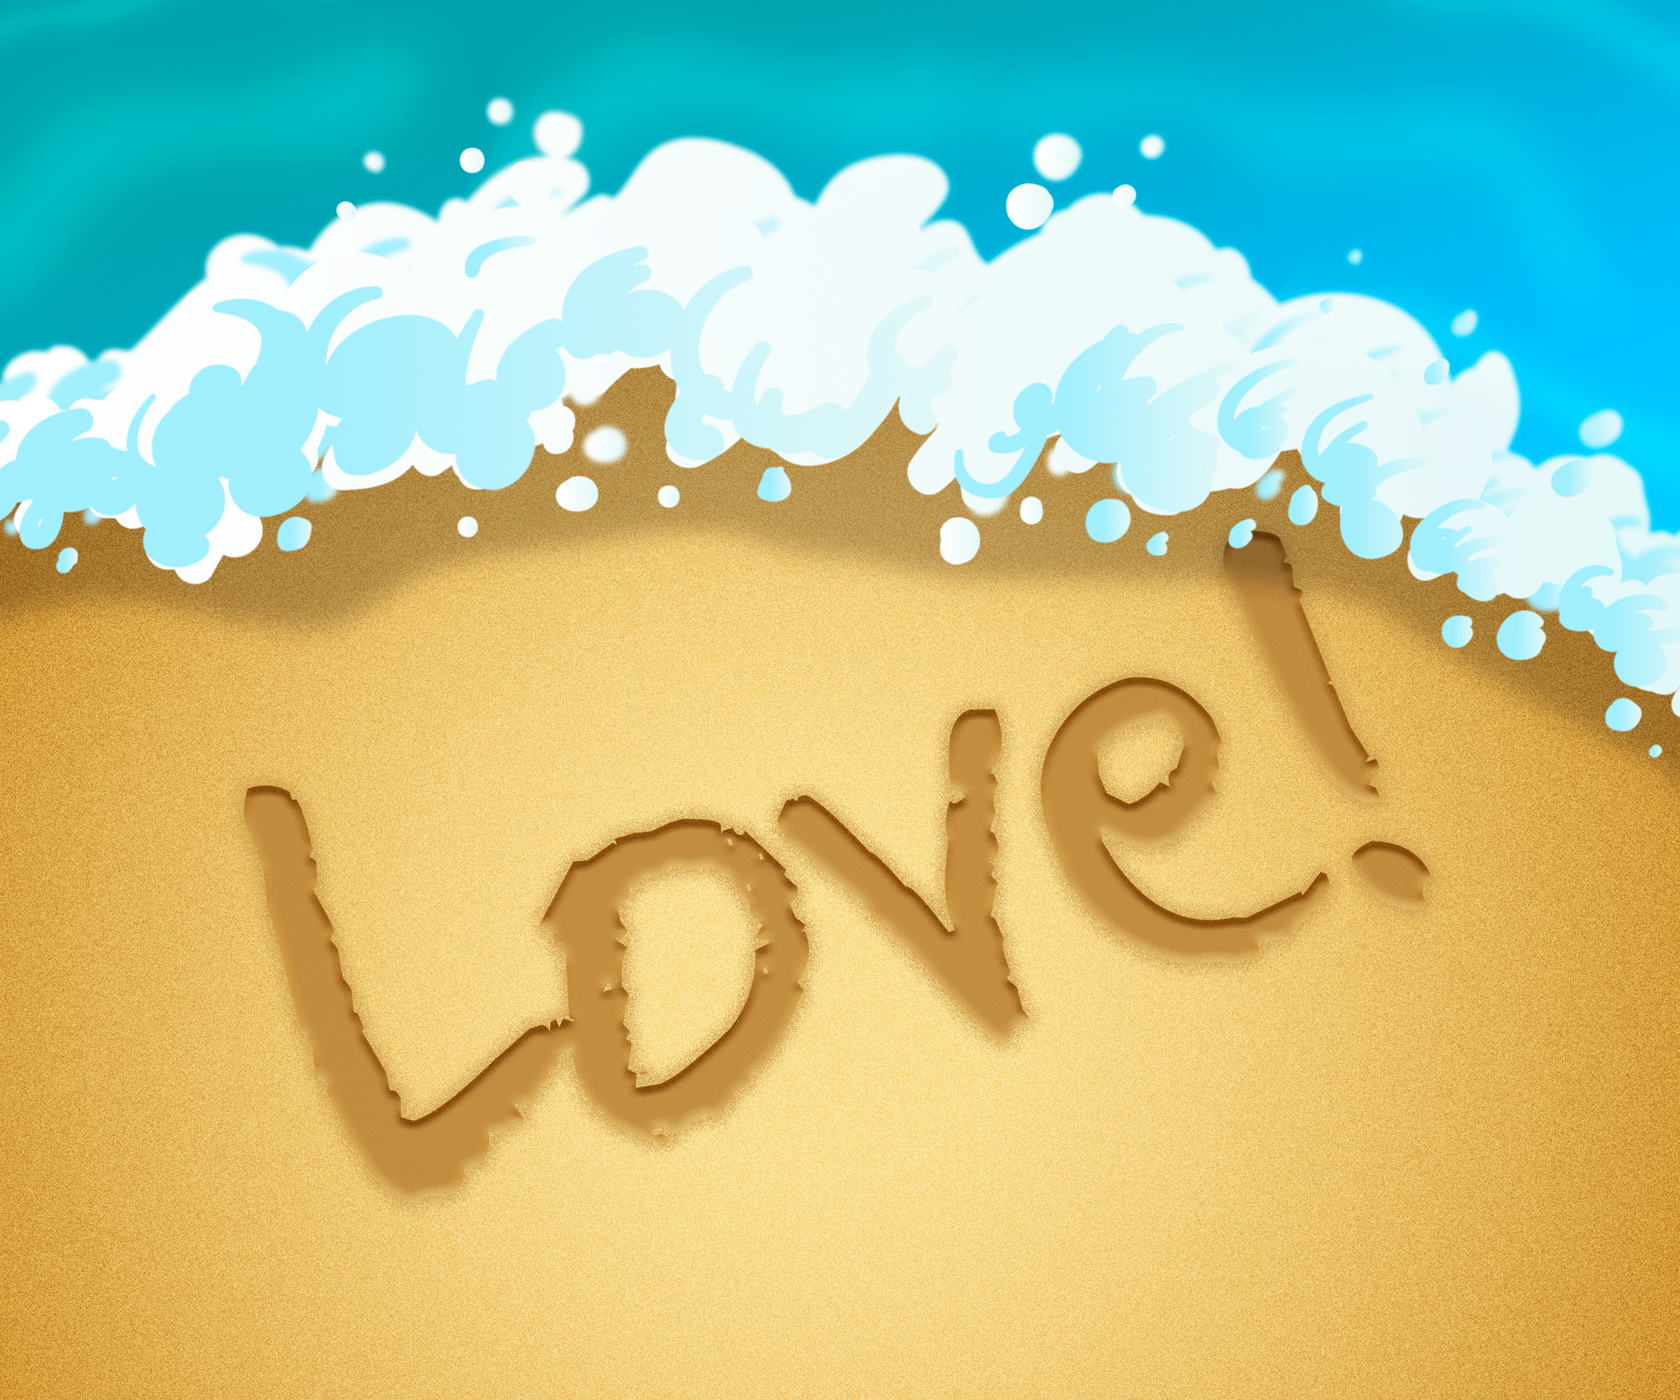 Love Beach Represents Boyfriend Coast And Fondness, Adoration, Love, Tenderness, Seaside, HQ Photo